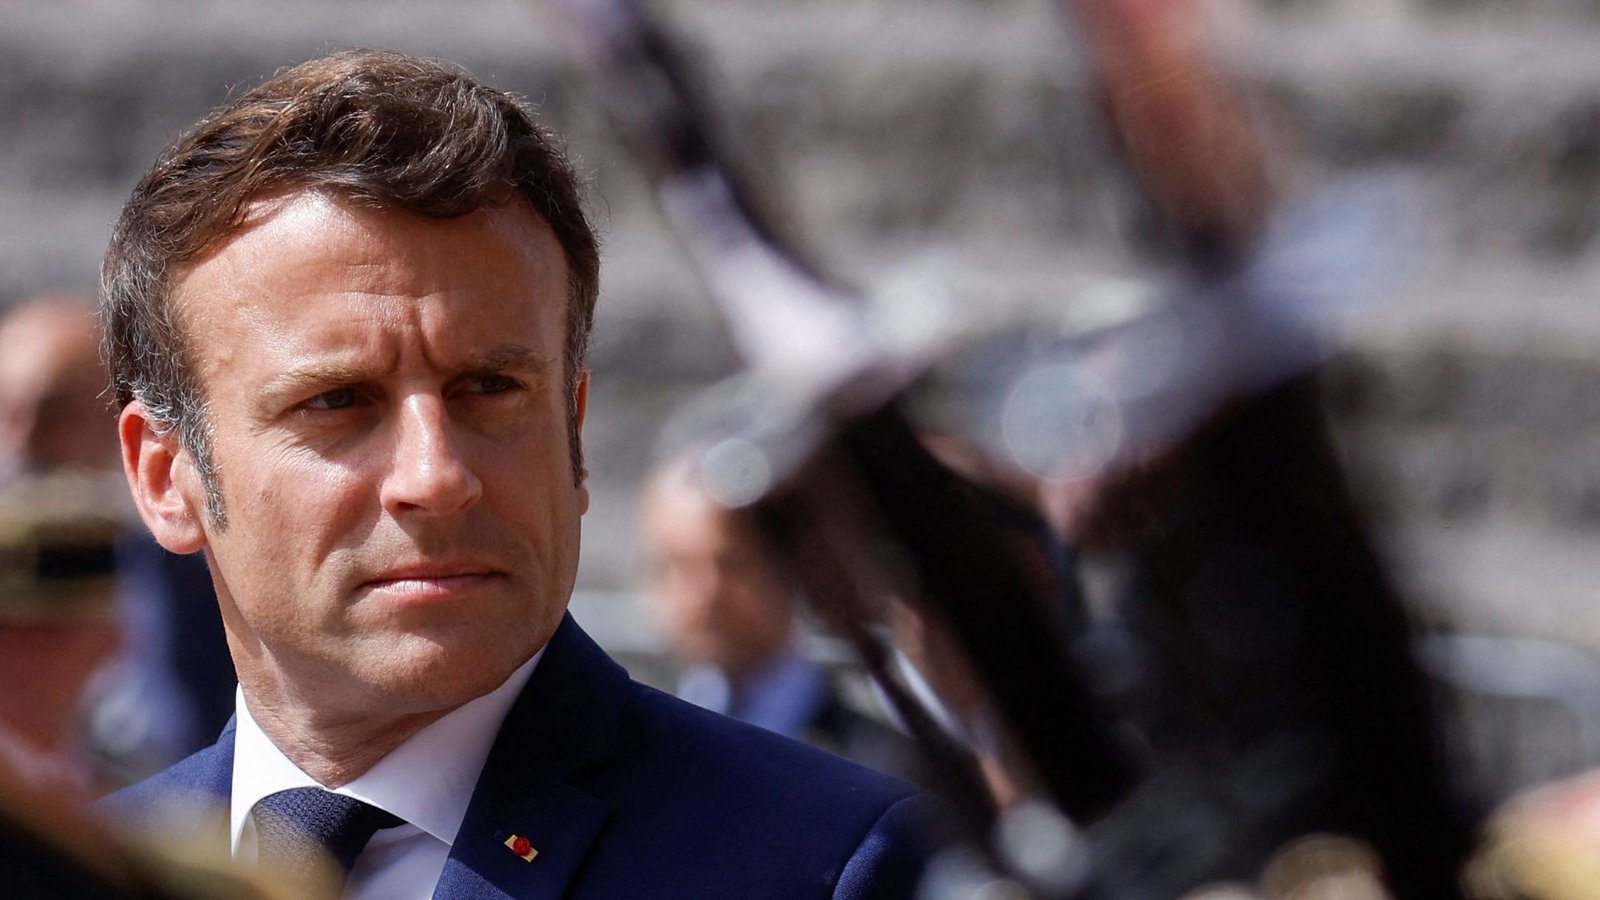 Emmanuel Macron steht in Frankreich in der Kritik.Foto: AFP/GONZALO FUENTES